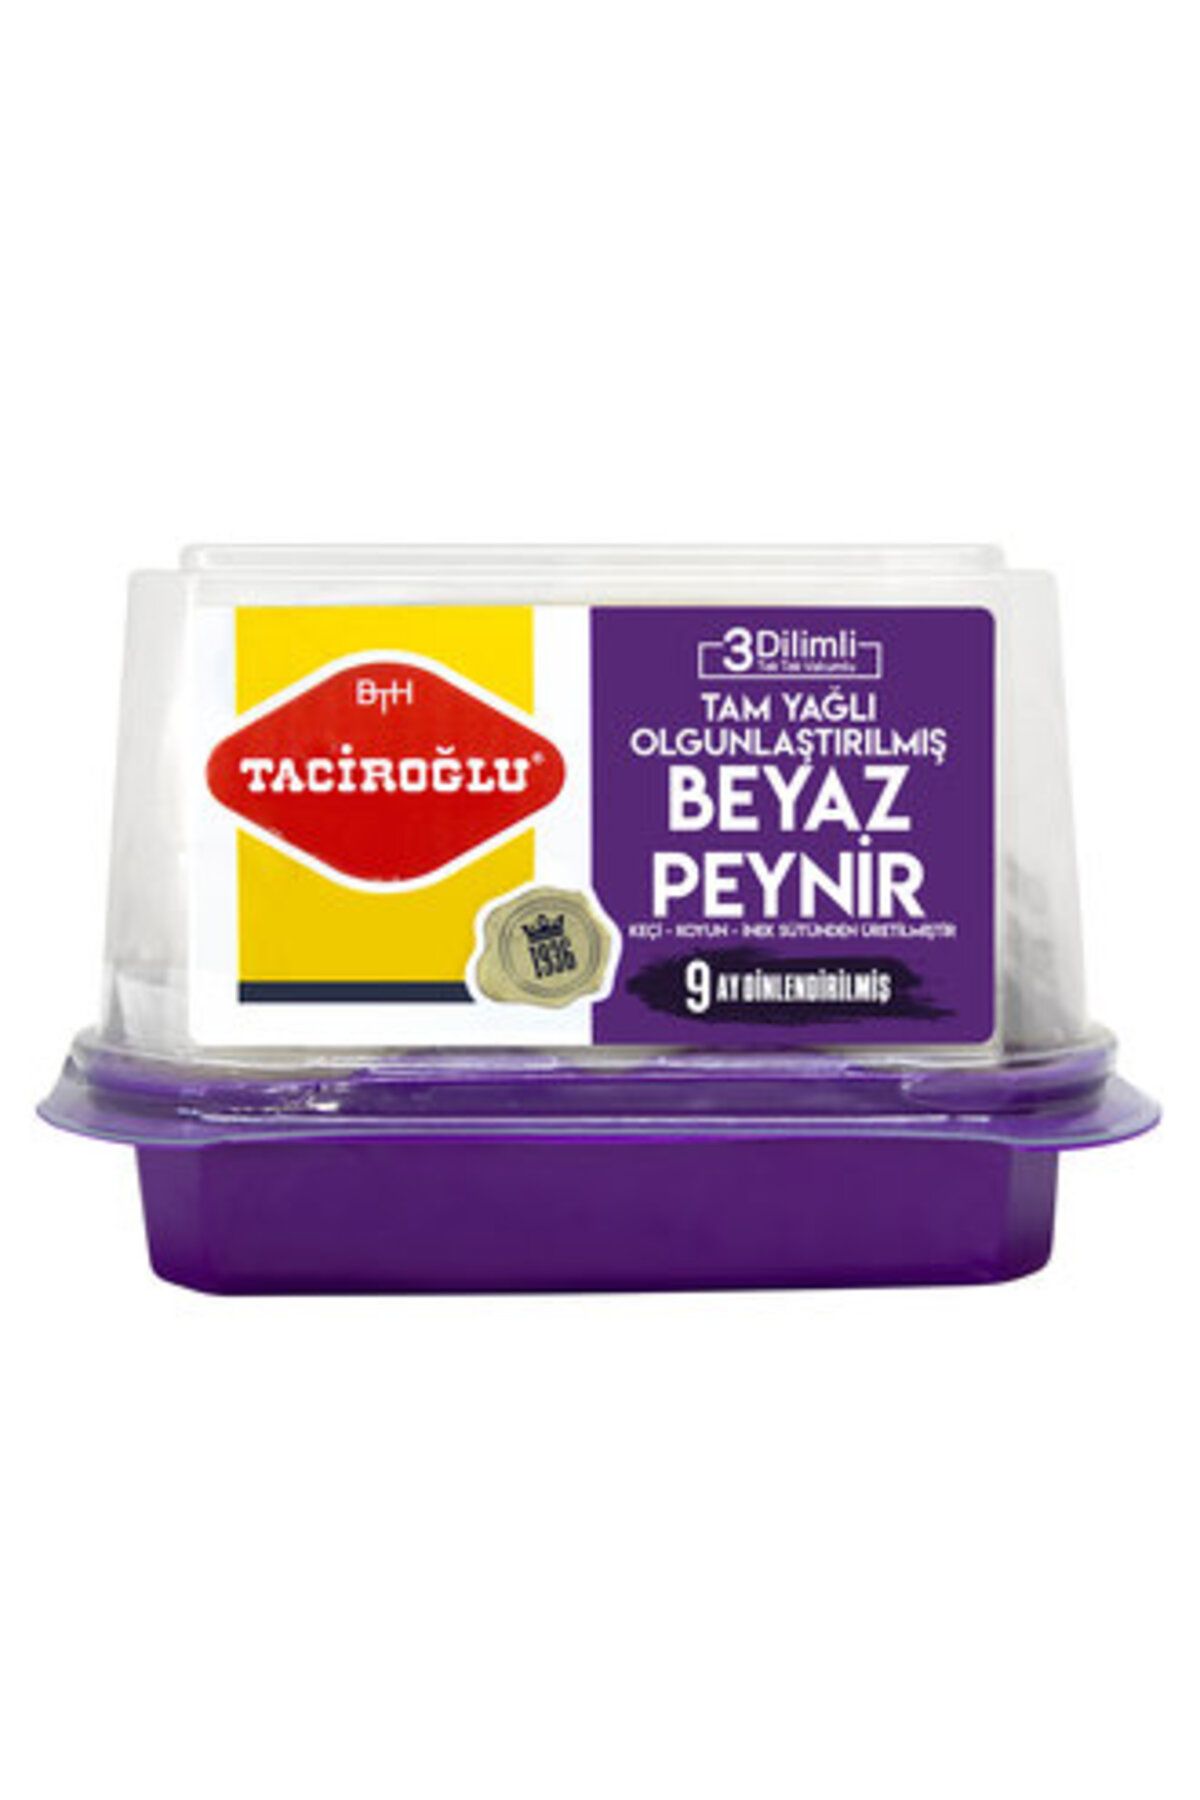 Taciroğlu 3 Dilimli Keçi Peyniri 450Gr